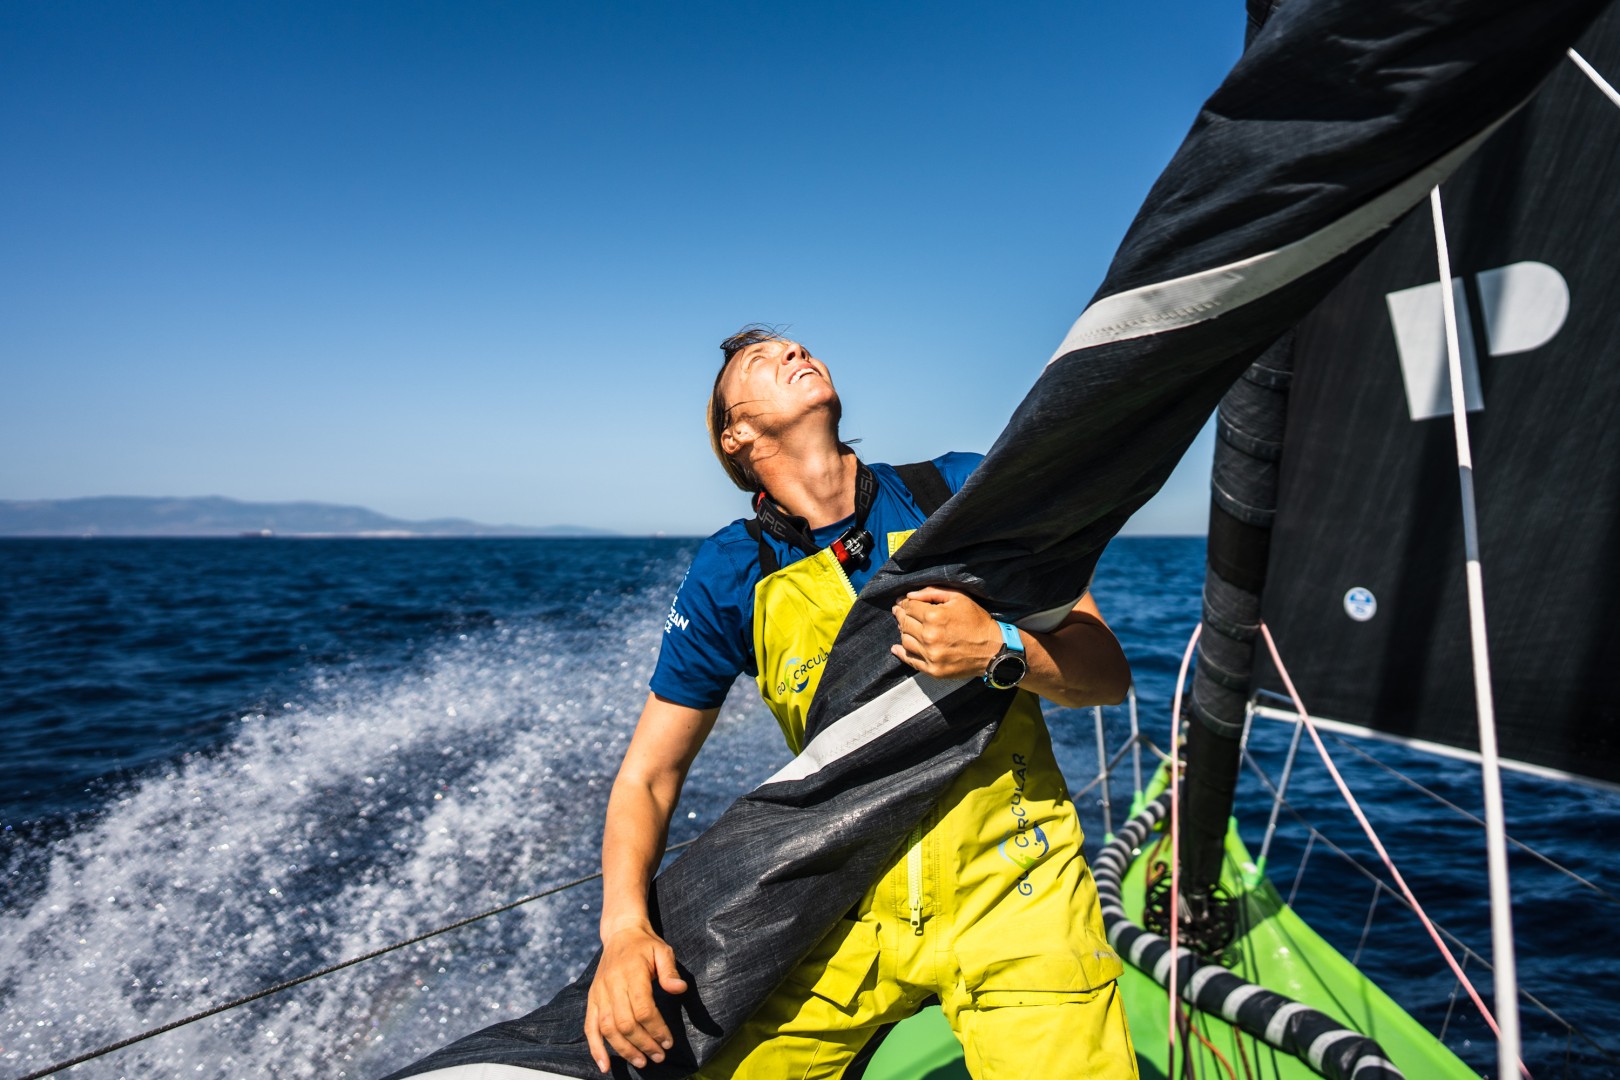 Leg 7 Day 7 onboard Team Holcim - PRB.
© Julien Champolion | polaRYSE / Holcim - PRB / The Ocean Race